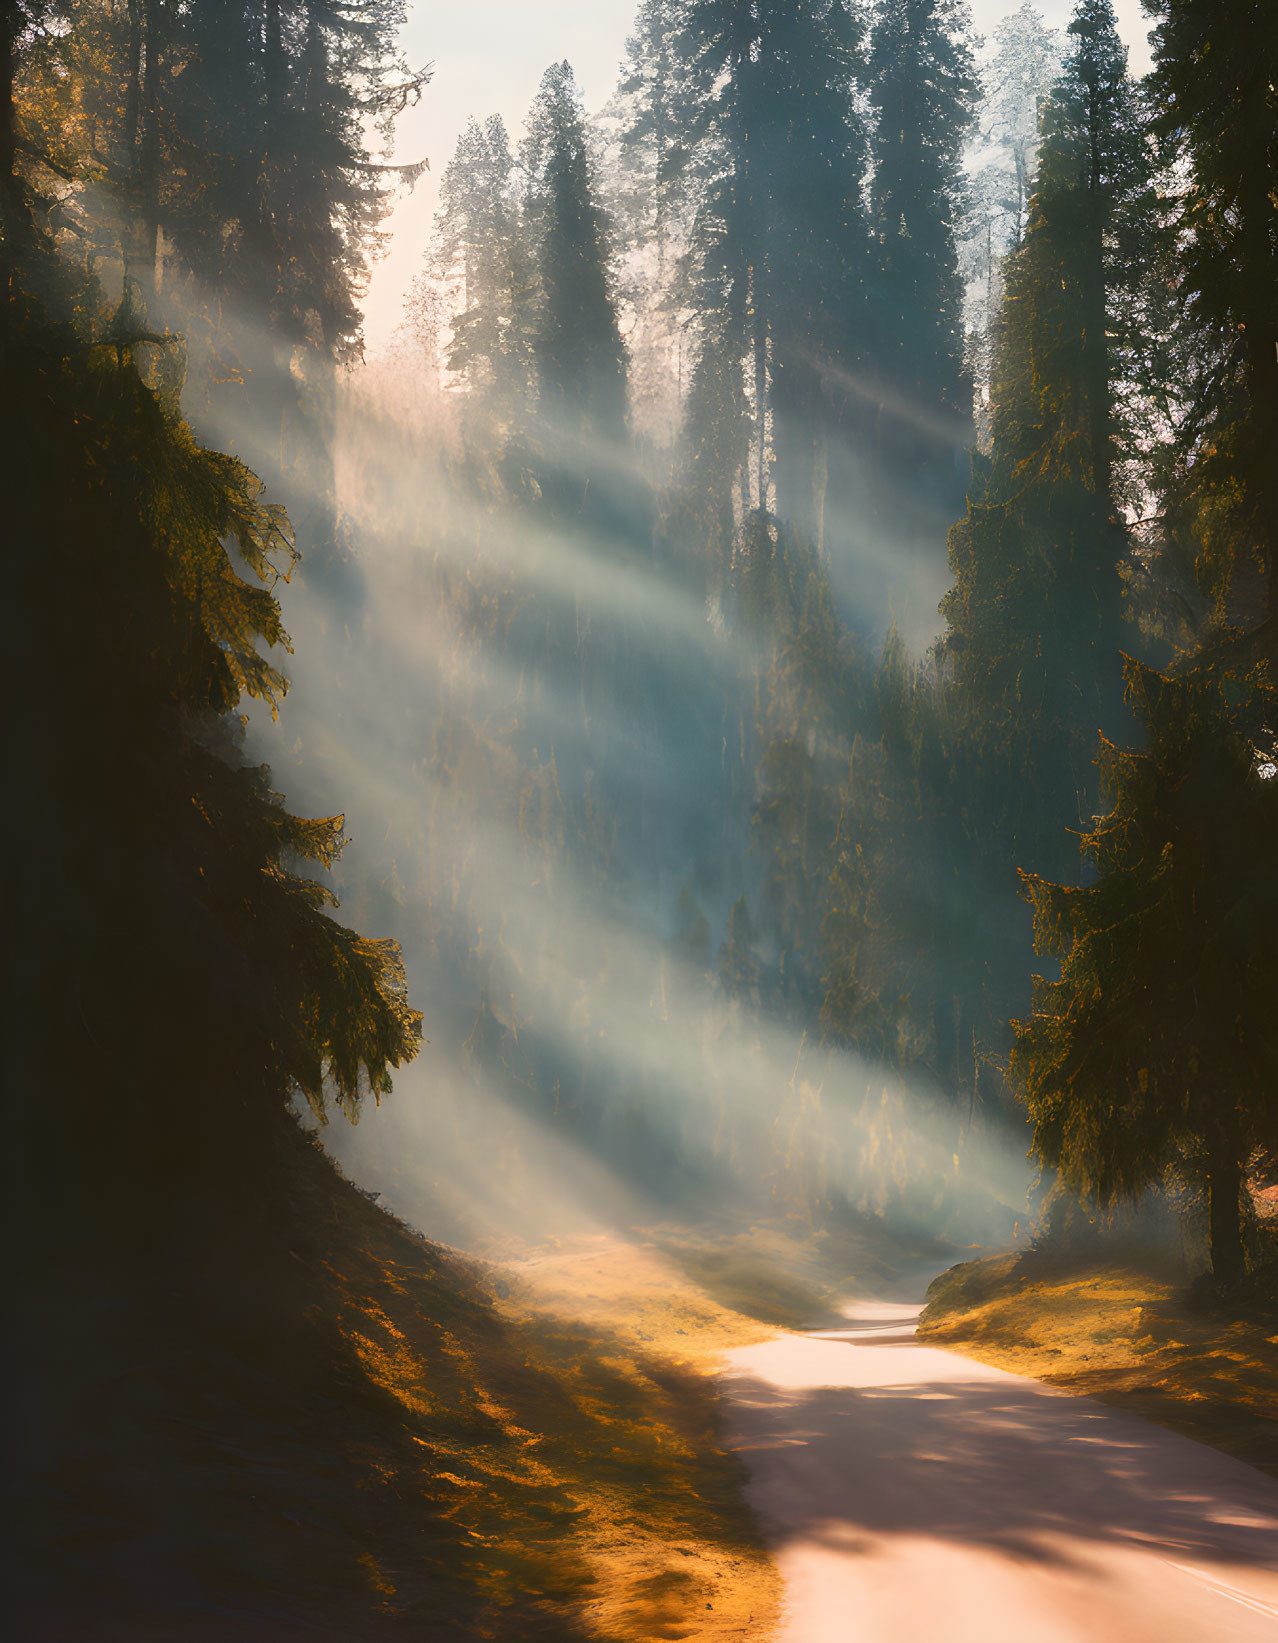 Forest scene: Sunlight through mist creates warm, ethereal glow